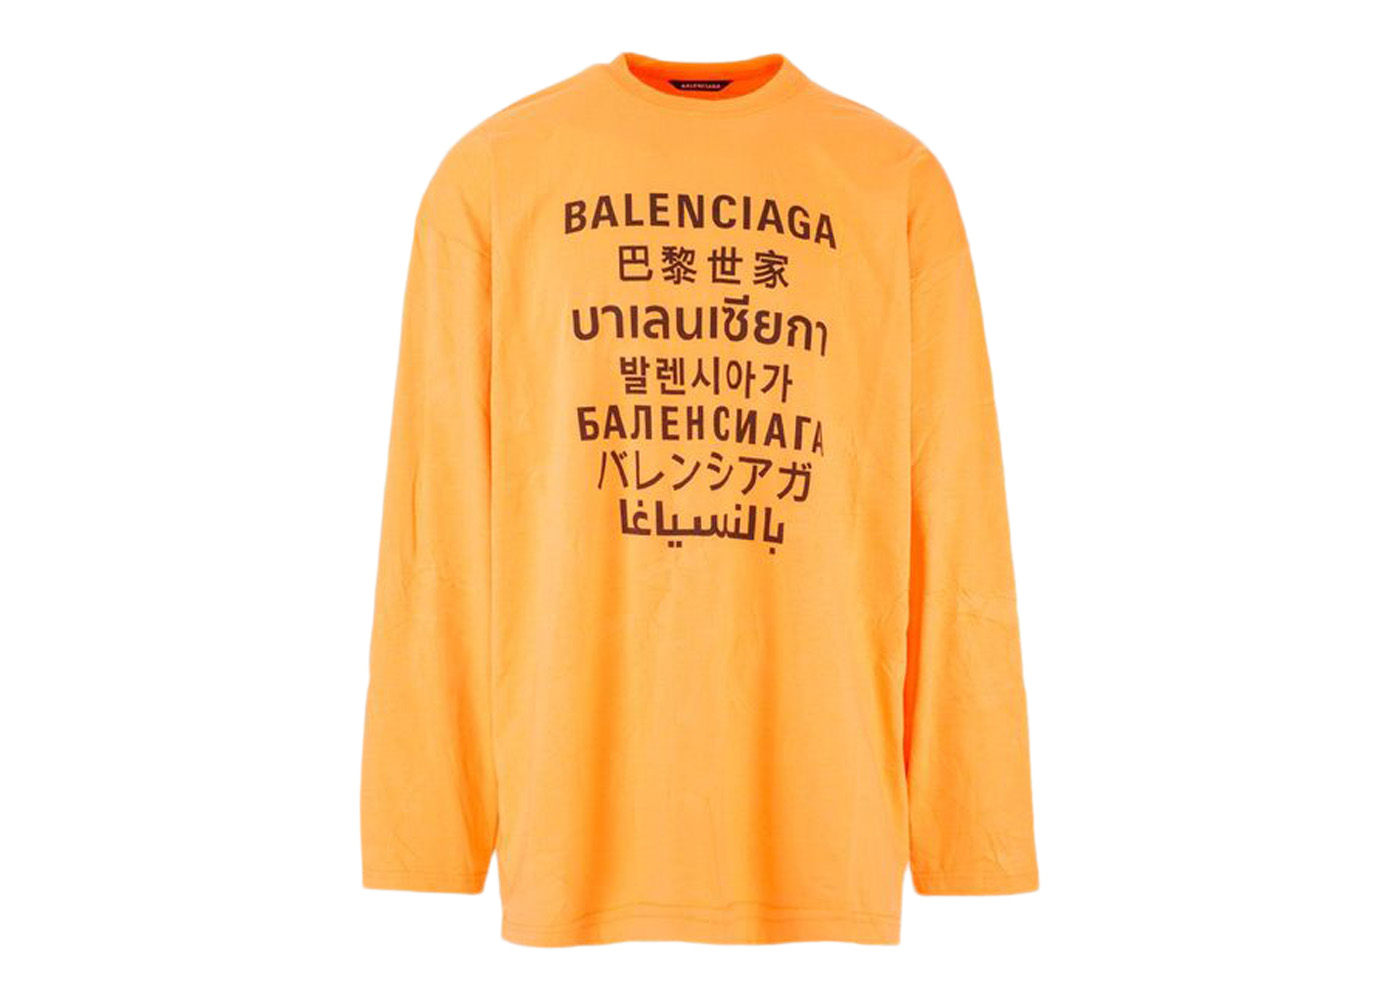 Balenciaga Languages printed Tshirt black  MODES